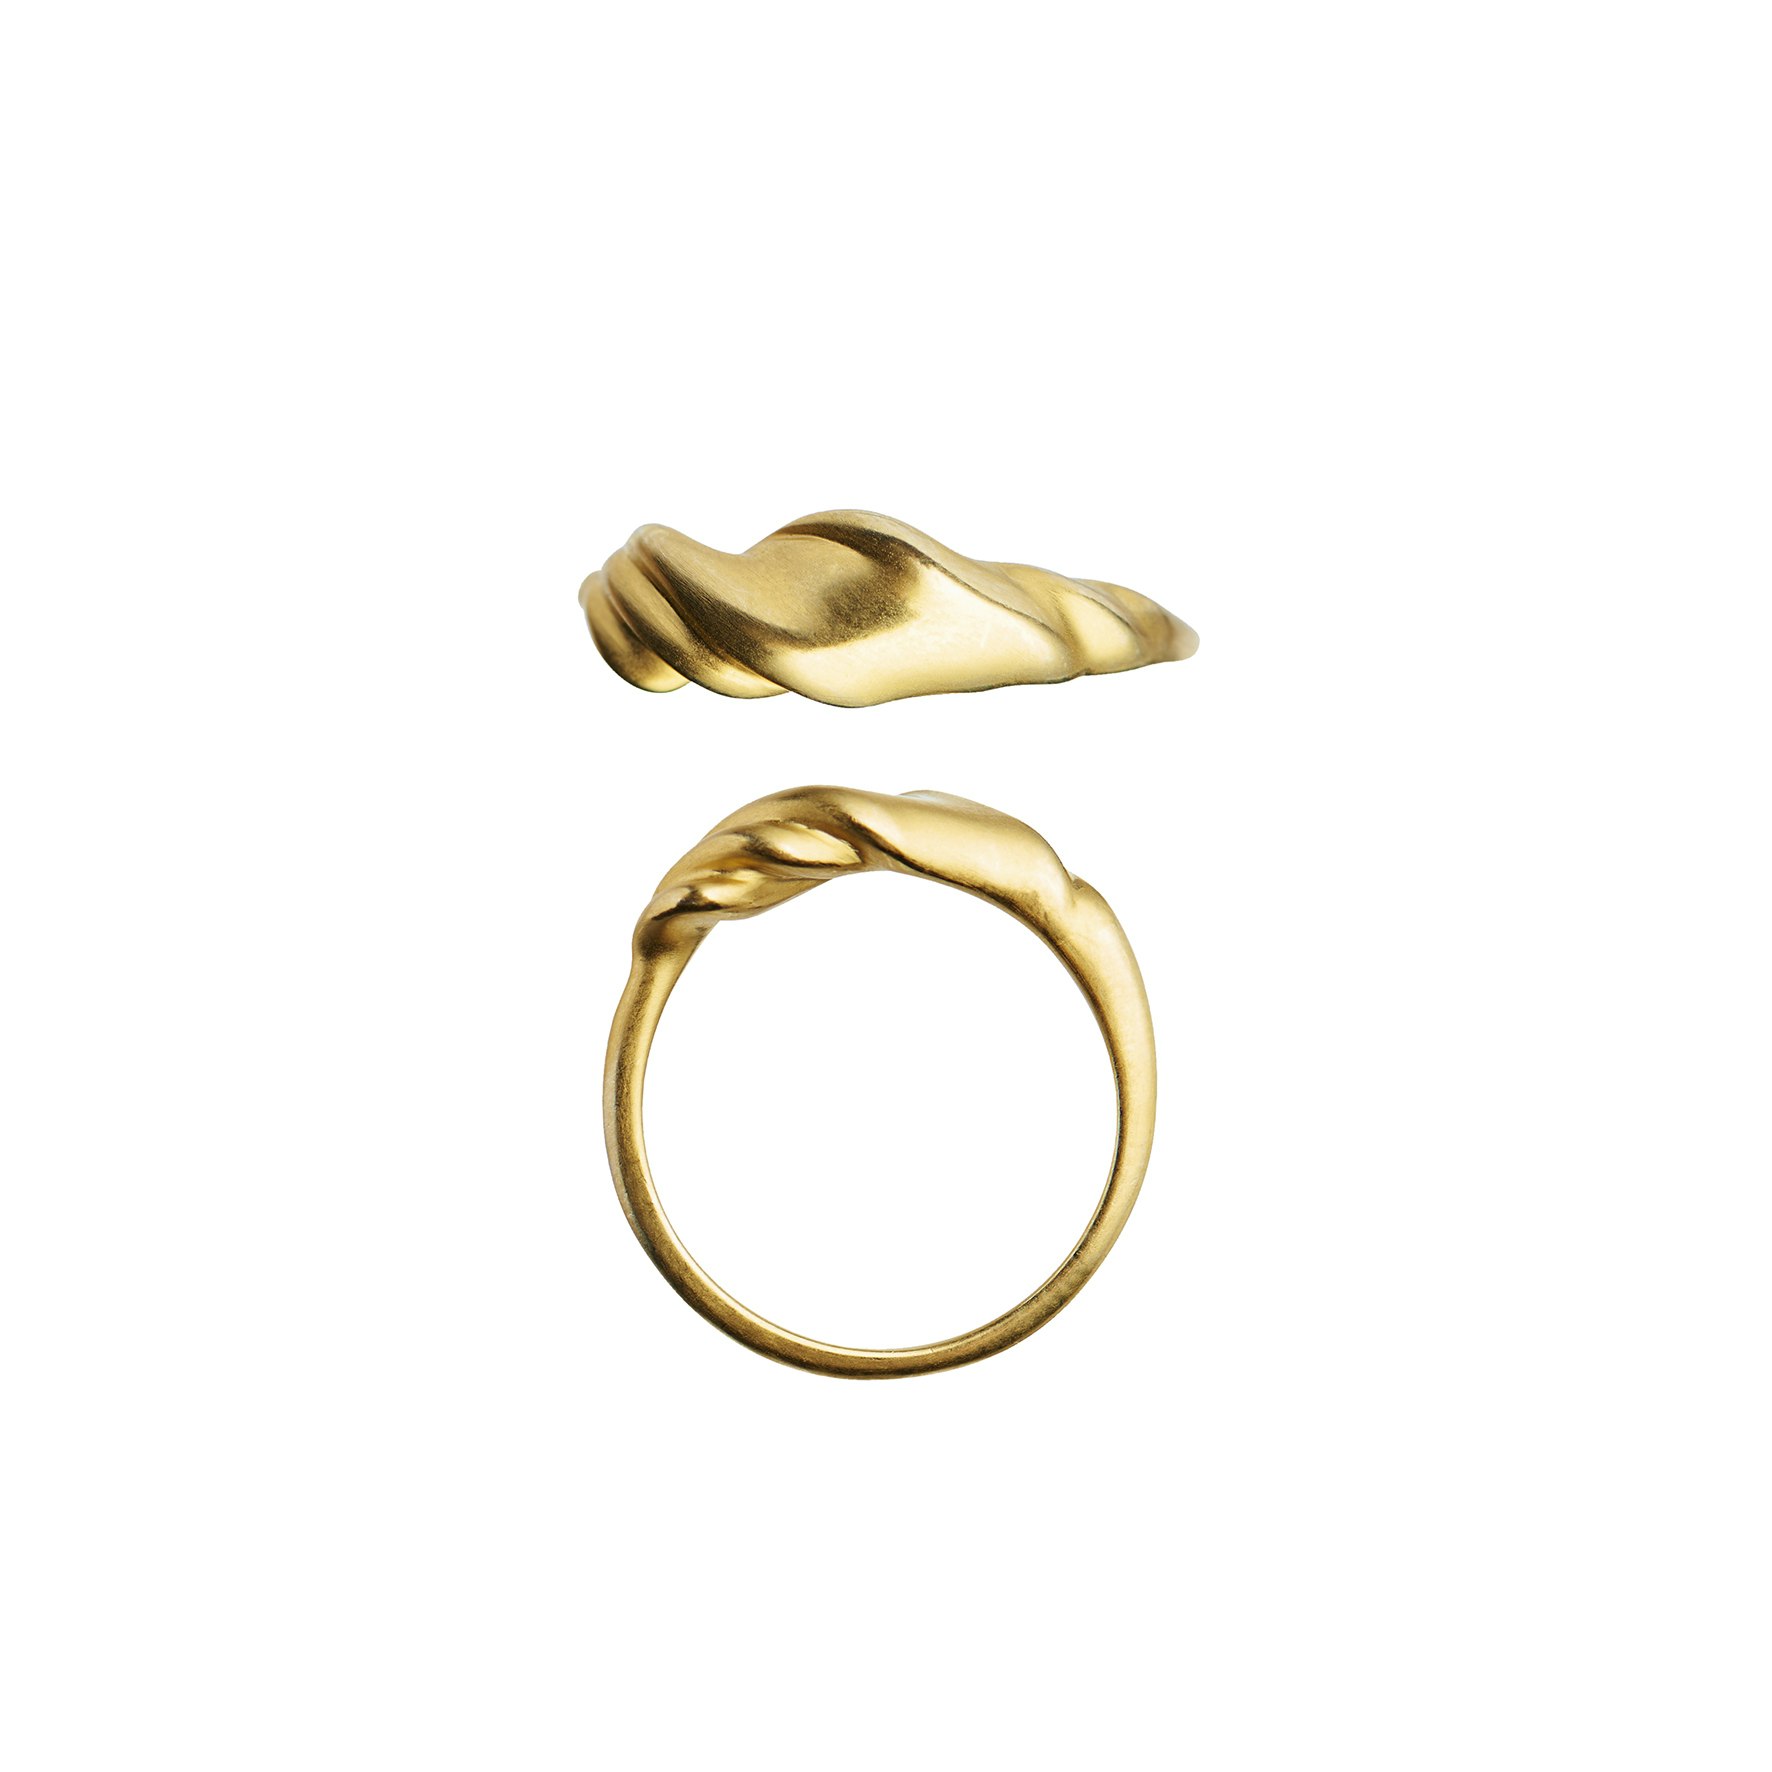 Velvet Ring von STINE A Jewelry in Vergoldet-Silber Sterling 925